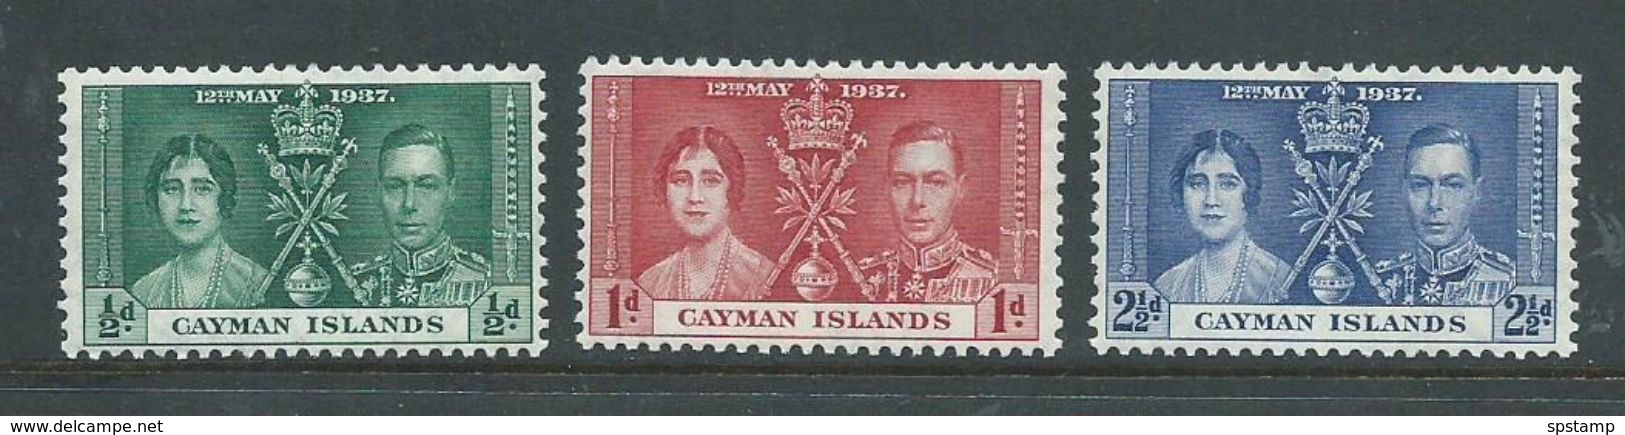 Cayman Islands 1937 KGVI Coronation Set 3 MNH - Cayman Islands